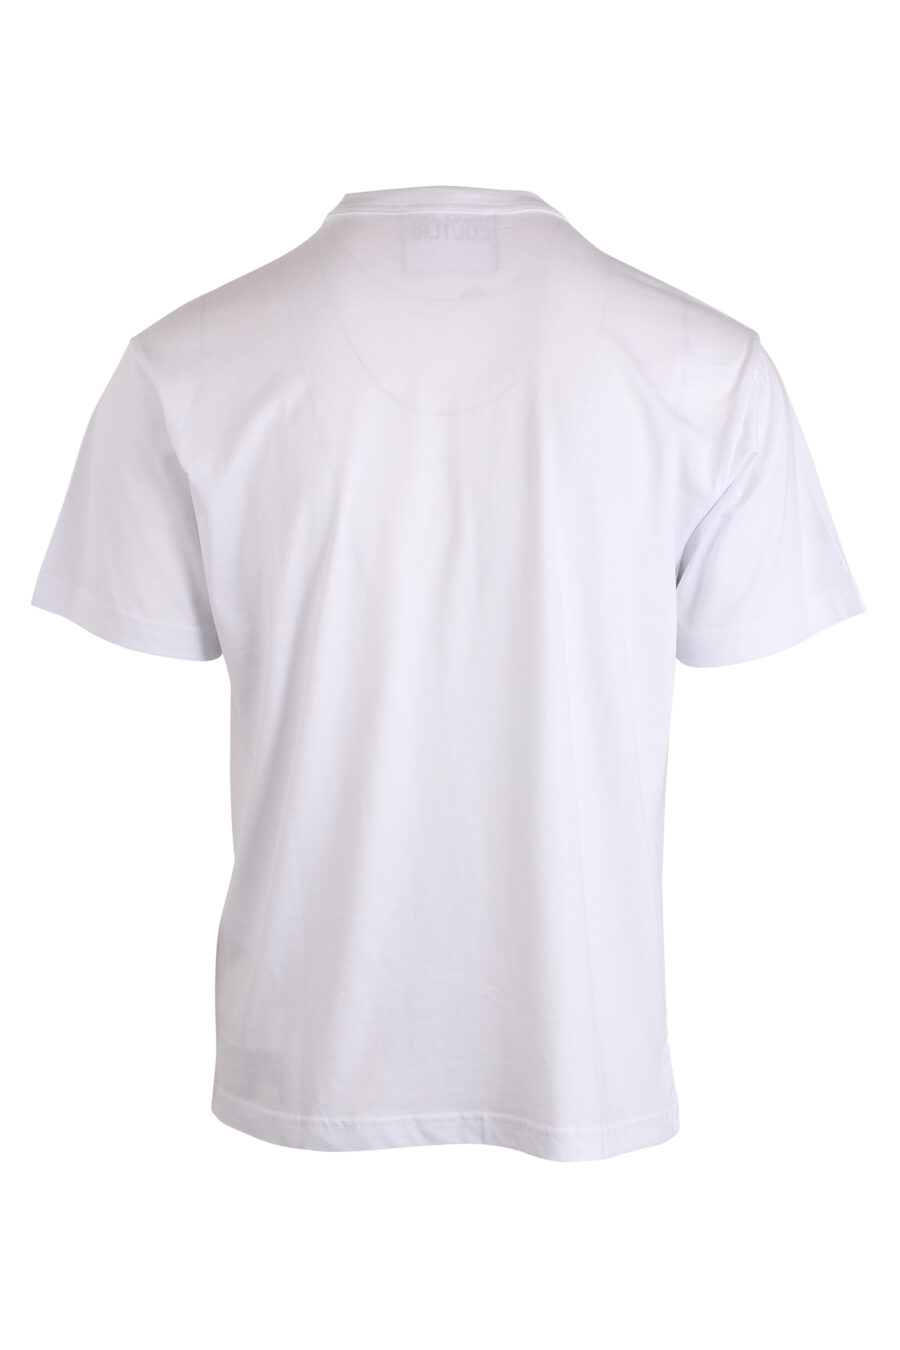 Camiseta blanca con logo cuadrado centro - IMG 4212